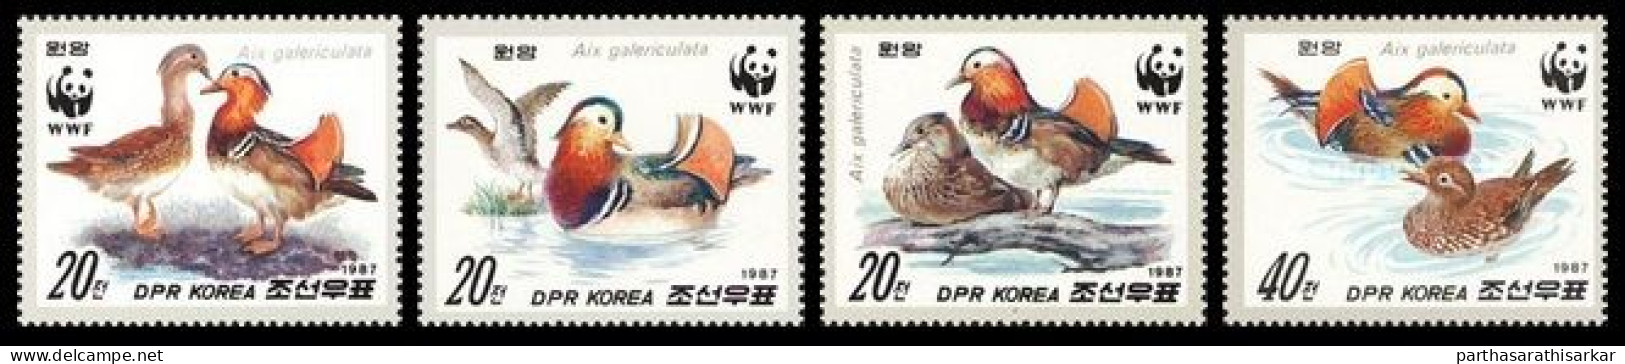 NORTH KOREA 1987 WWF WORLD NATURE CONSERVATION MANDARIN DUCKS COMPLETE SET MNH - Ungebraucht